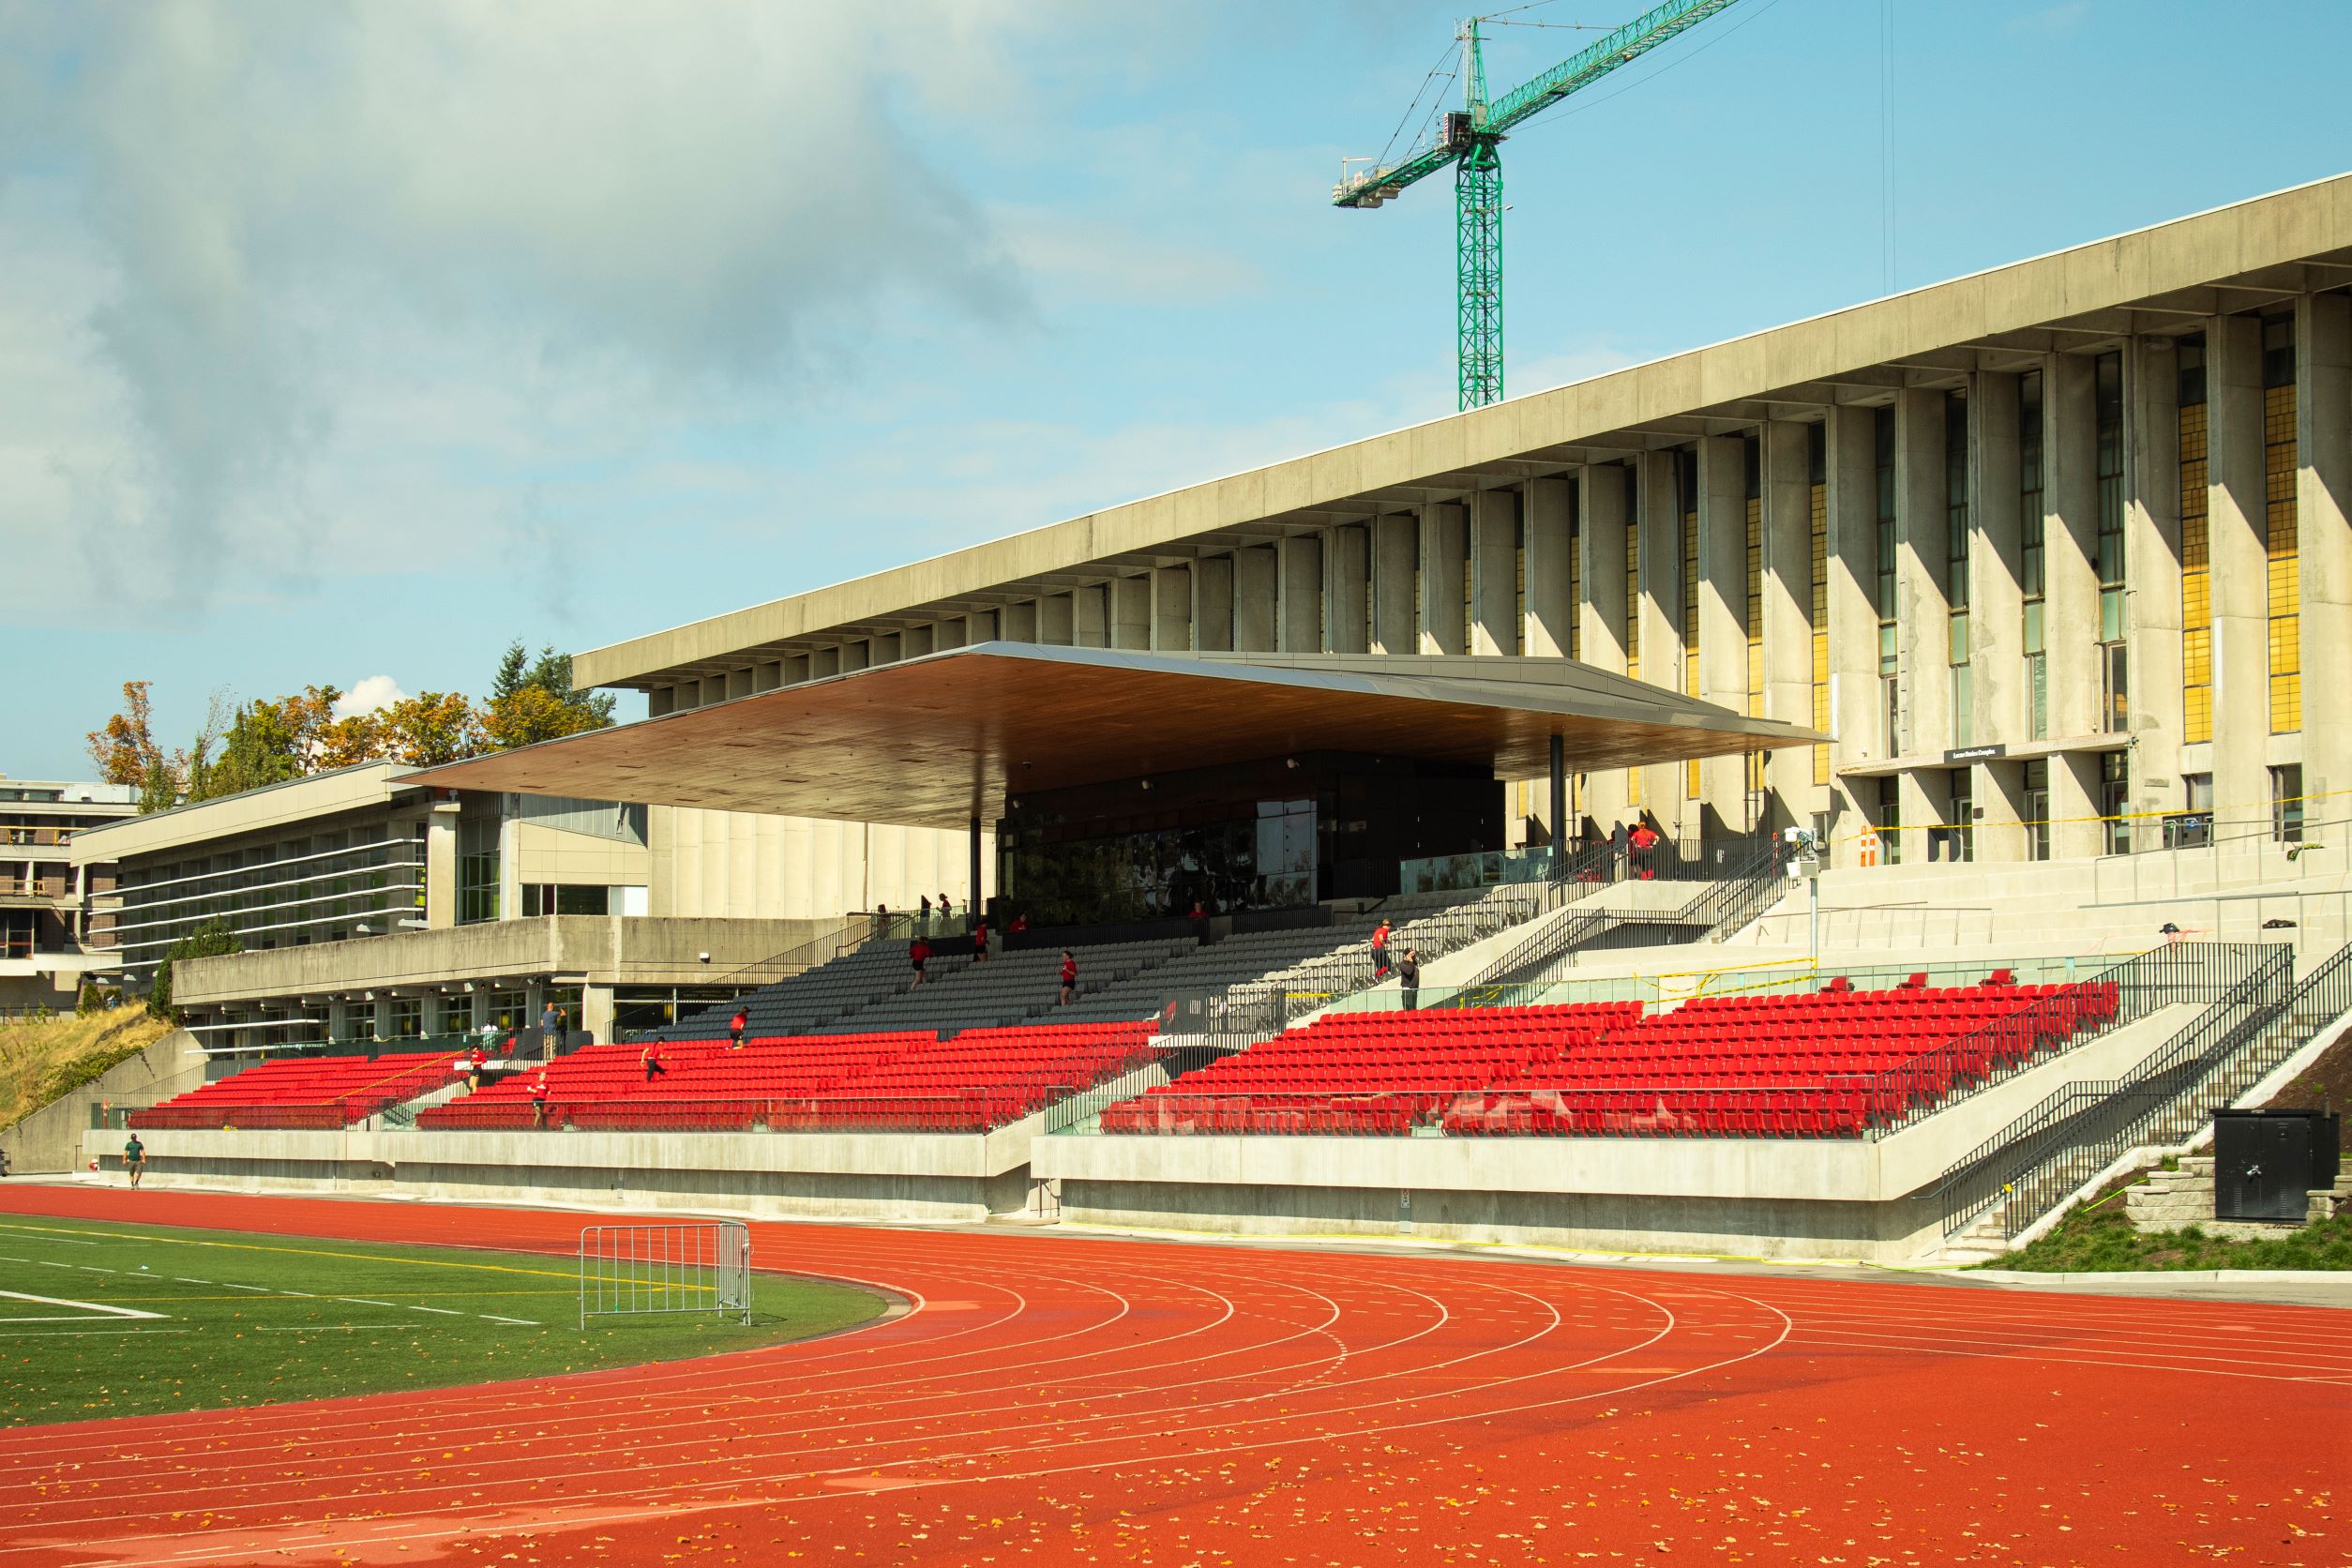 SFU stadium with red seats